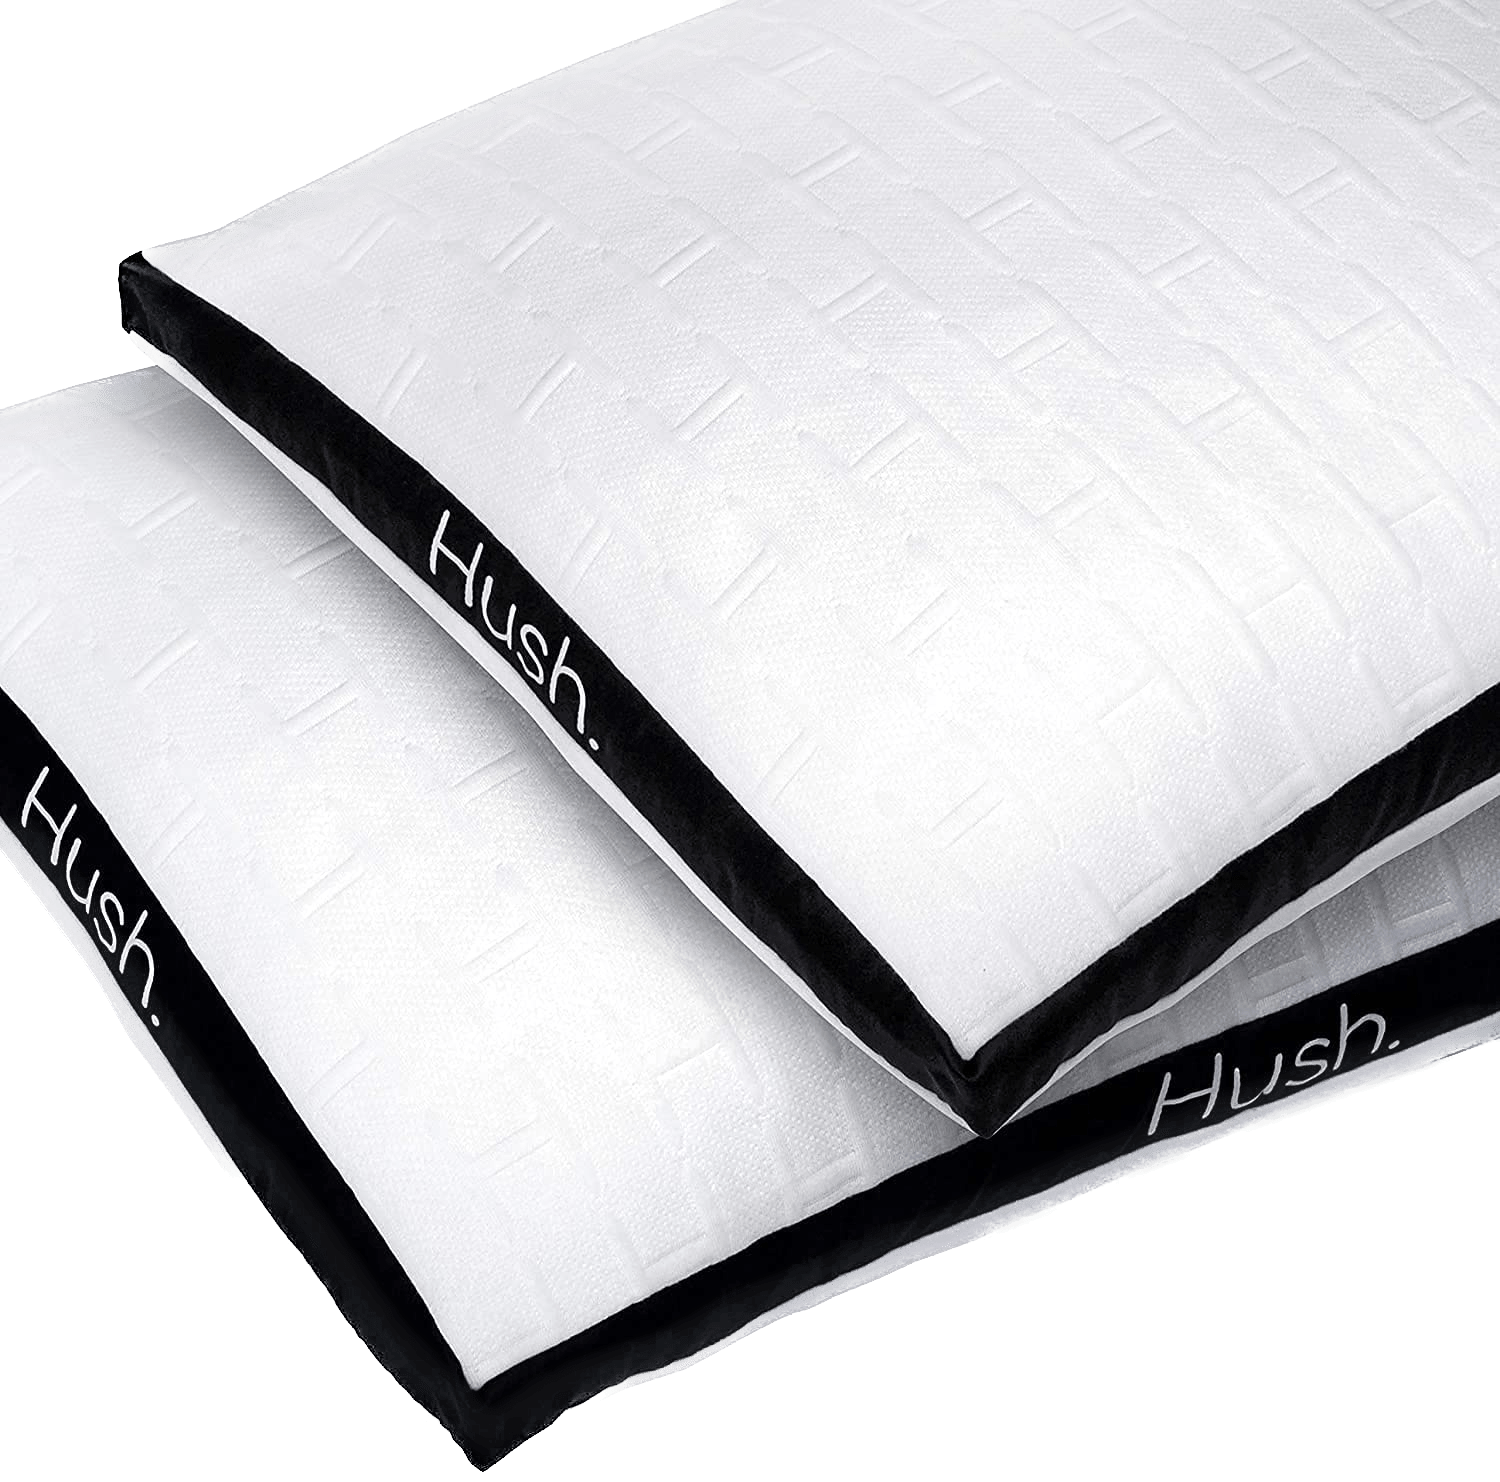 Hush Hybrid Pillow Review